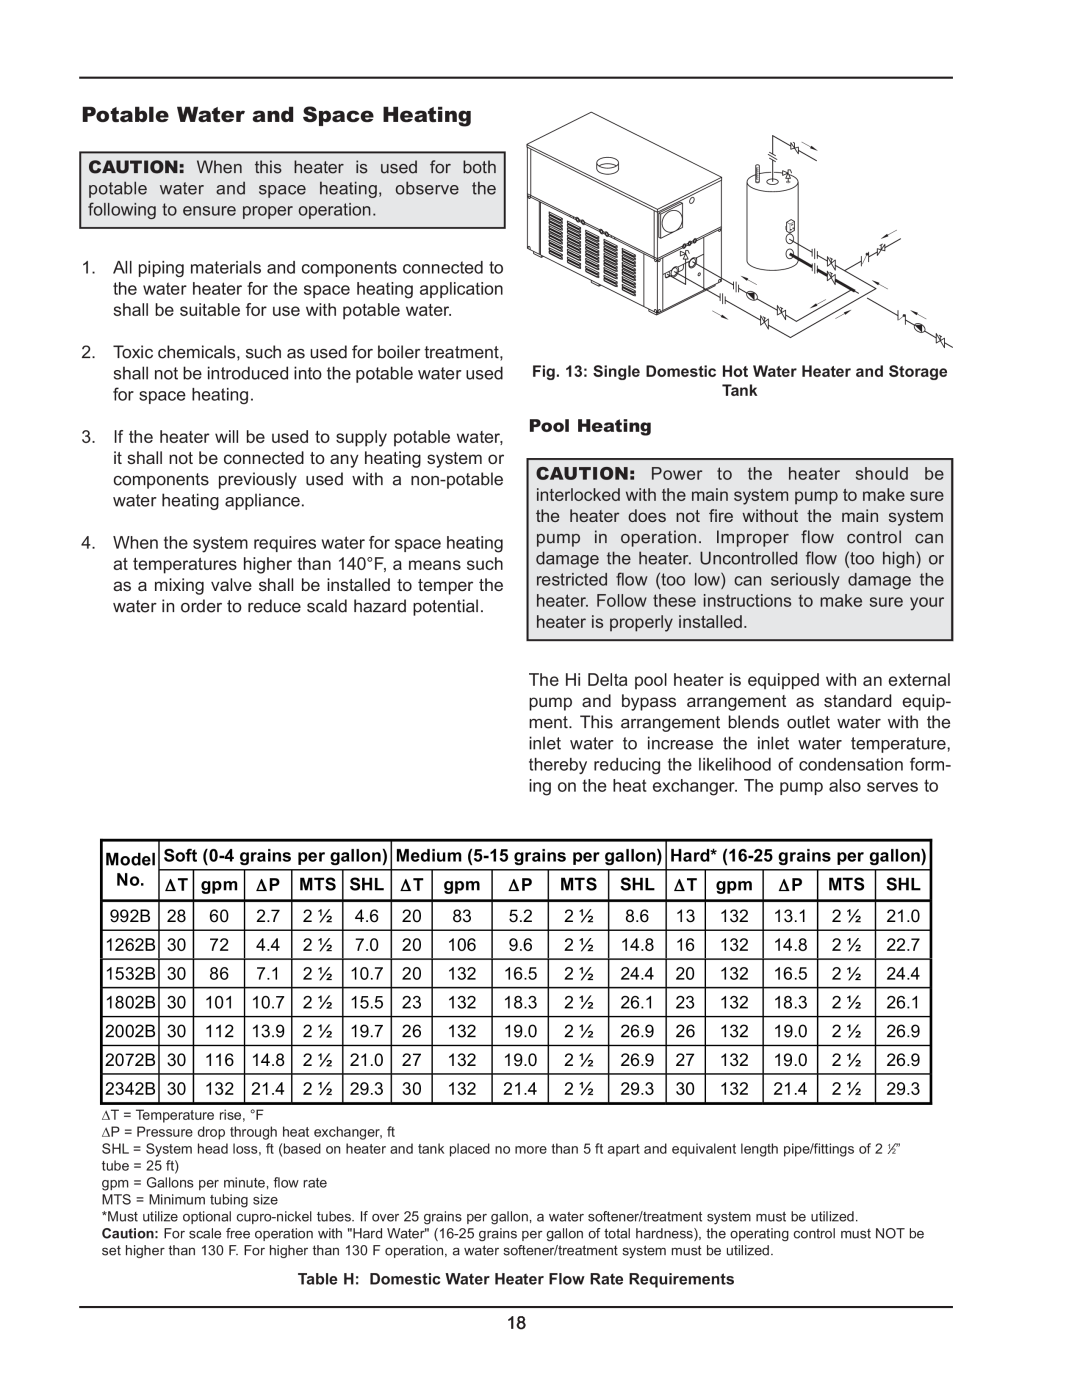 Raypak 992B-1262B manual Potable Water and Space Heating 